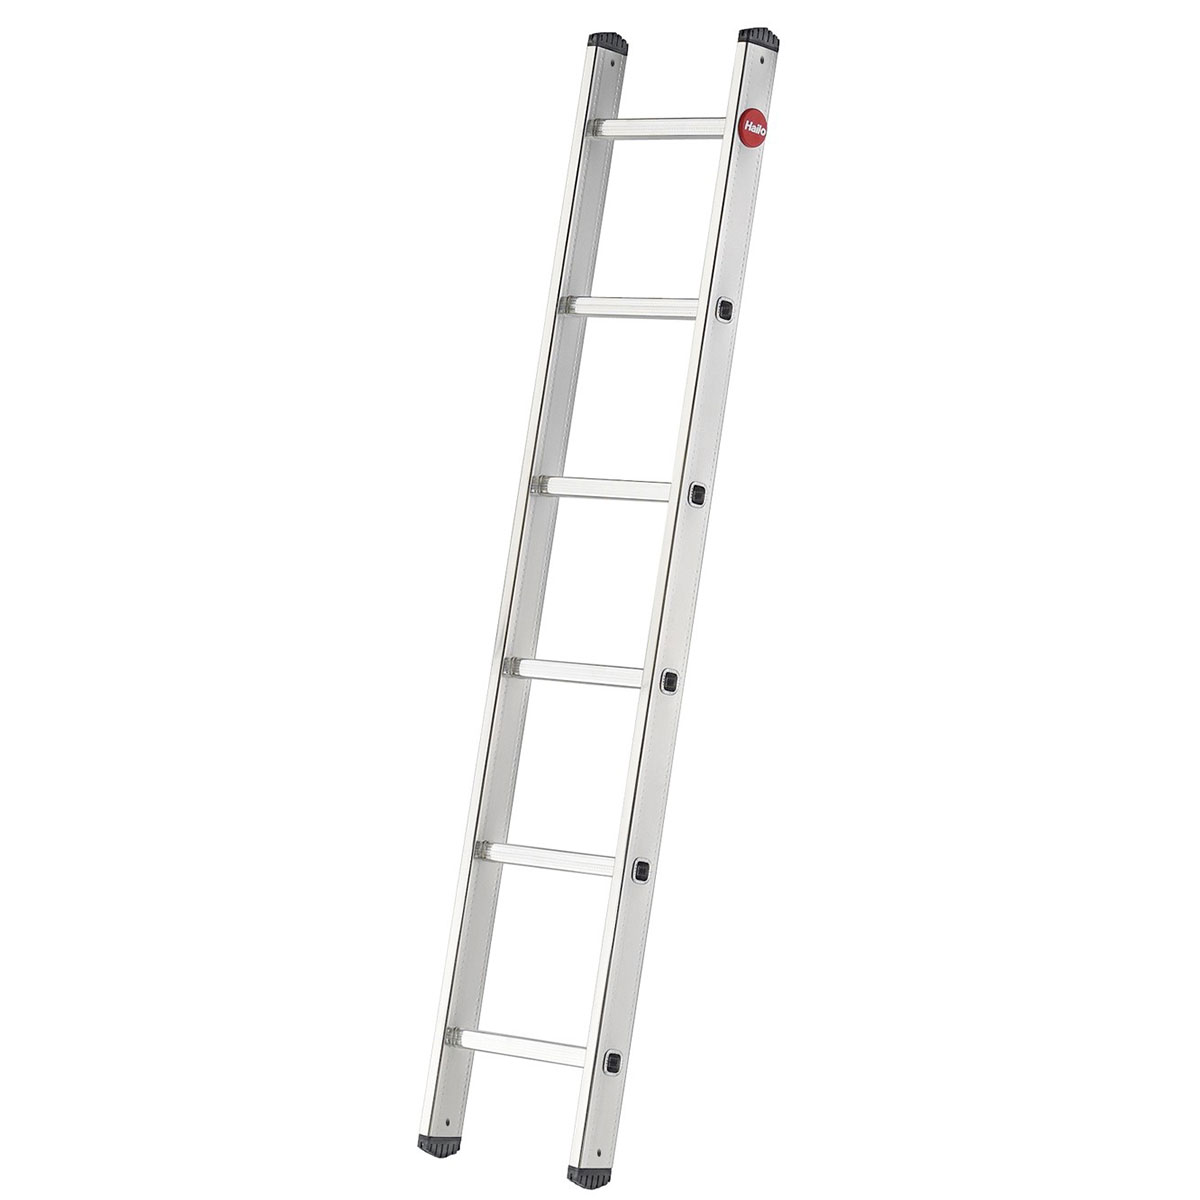 HAILO-S60-ProfiStep-Uno-Rung-Ladders-002